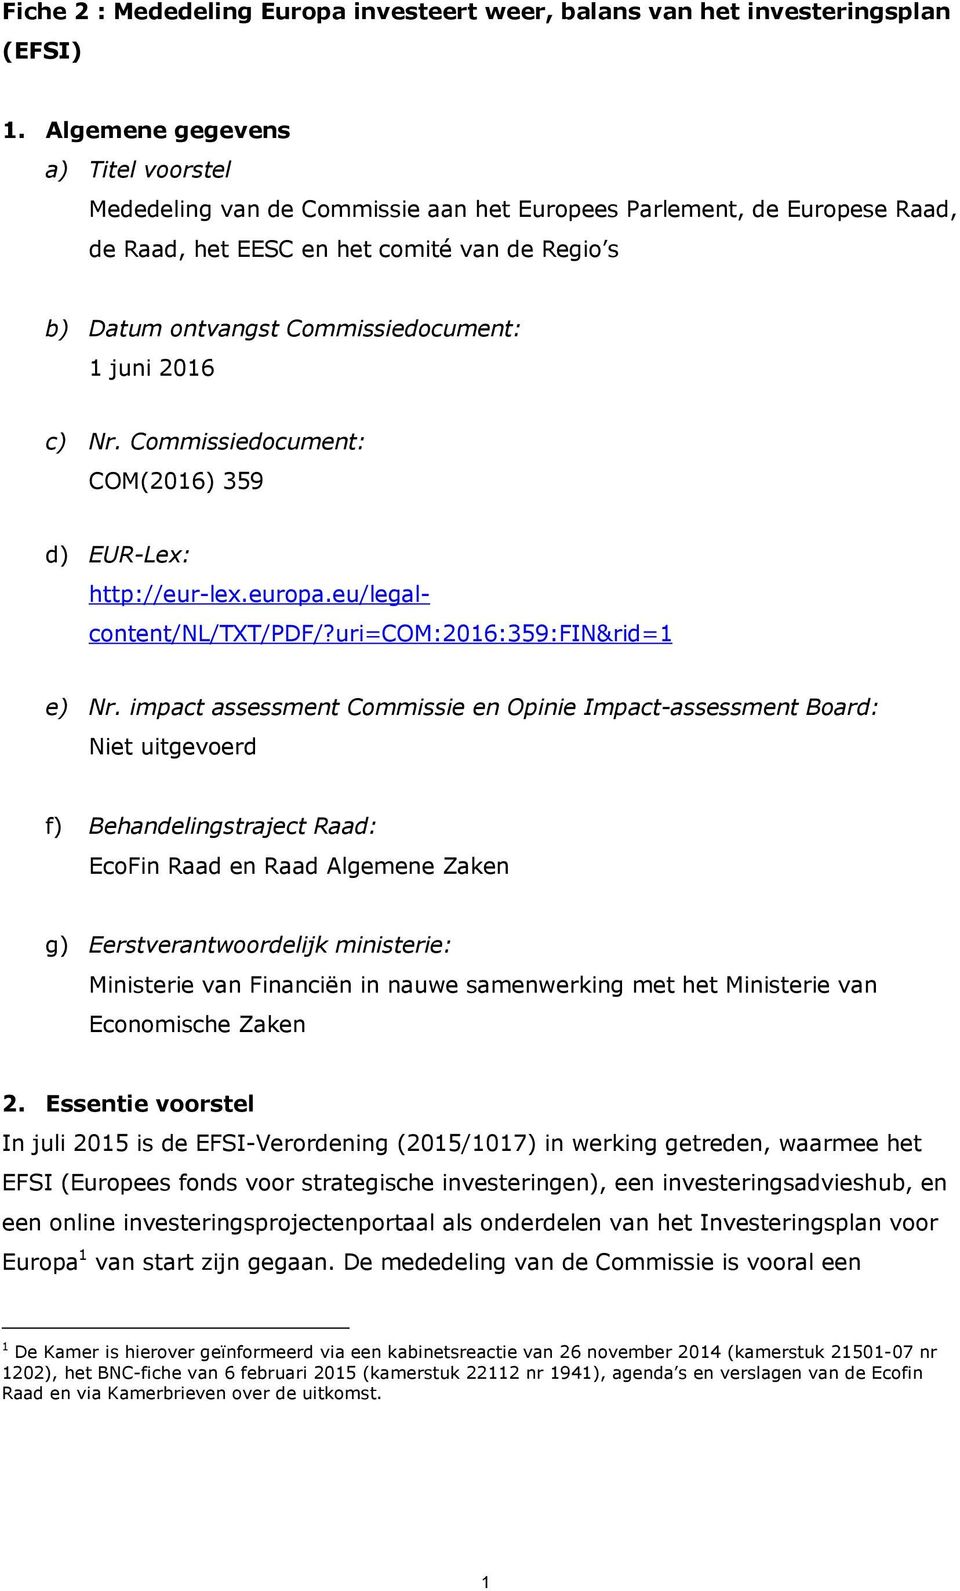 juni 2016 c) Nr. Commissiedocument: COM(2016) 359 d) EUR-Lex: http://eur-lex.europa.eu/legalcontent/nl/txt/pdf/?uri=com:2016:359:fin&rid=1 e) Nr.